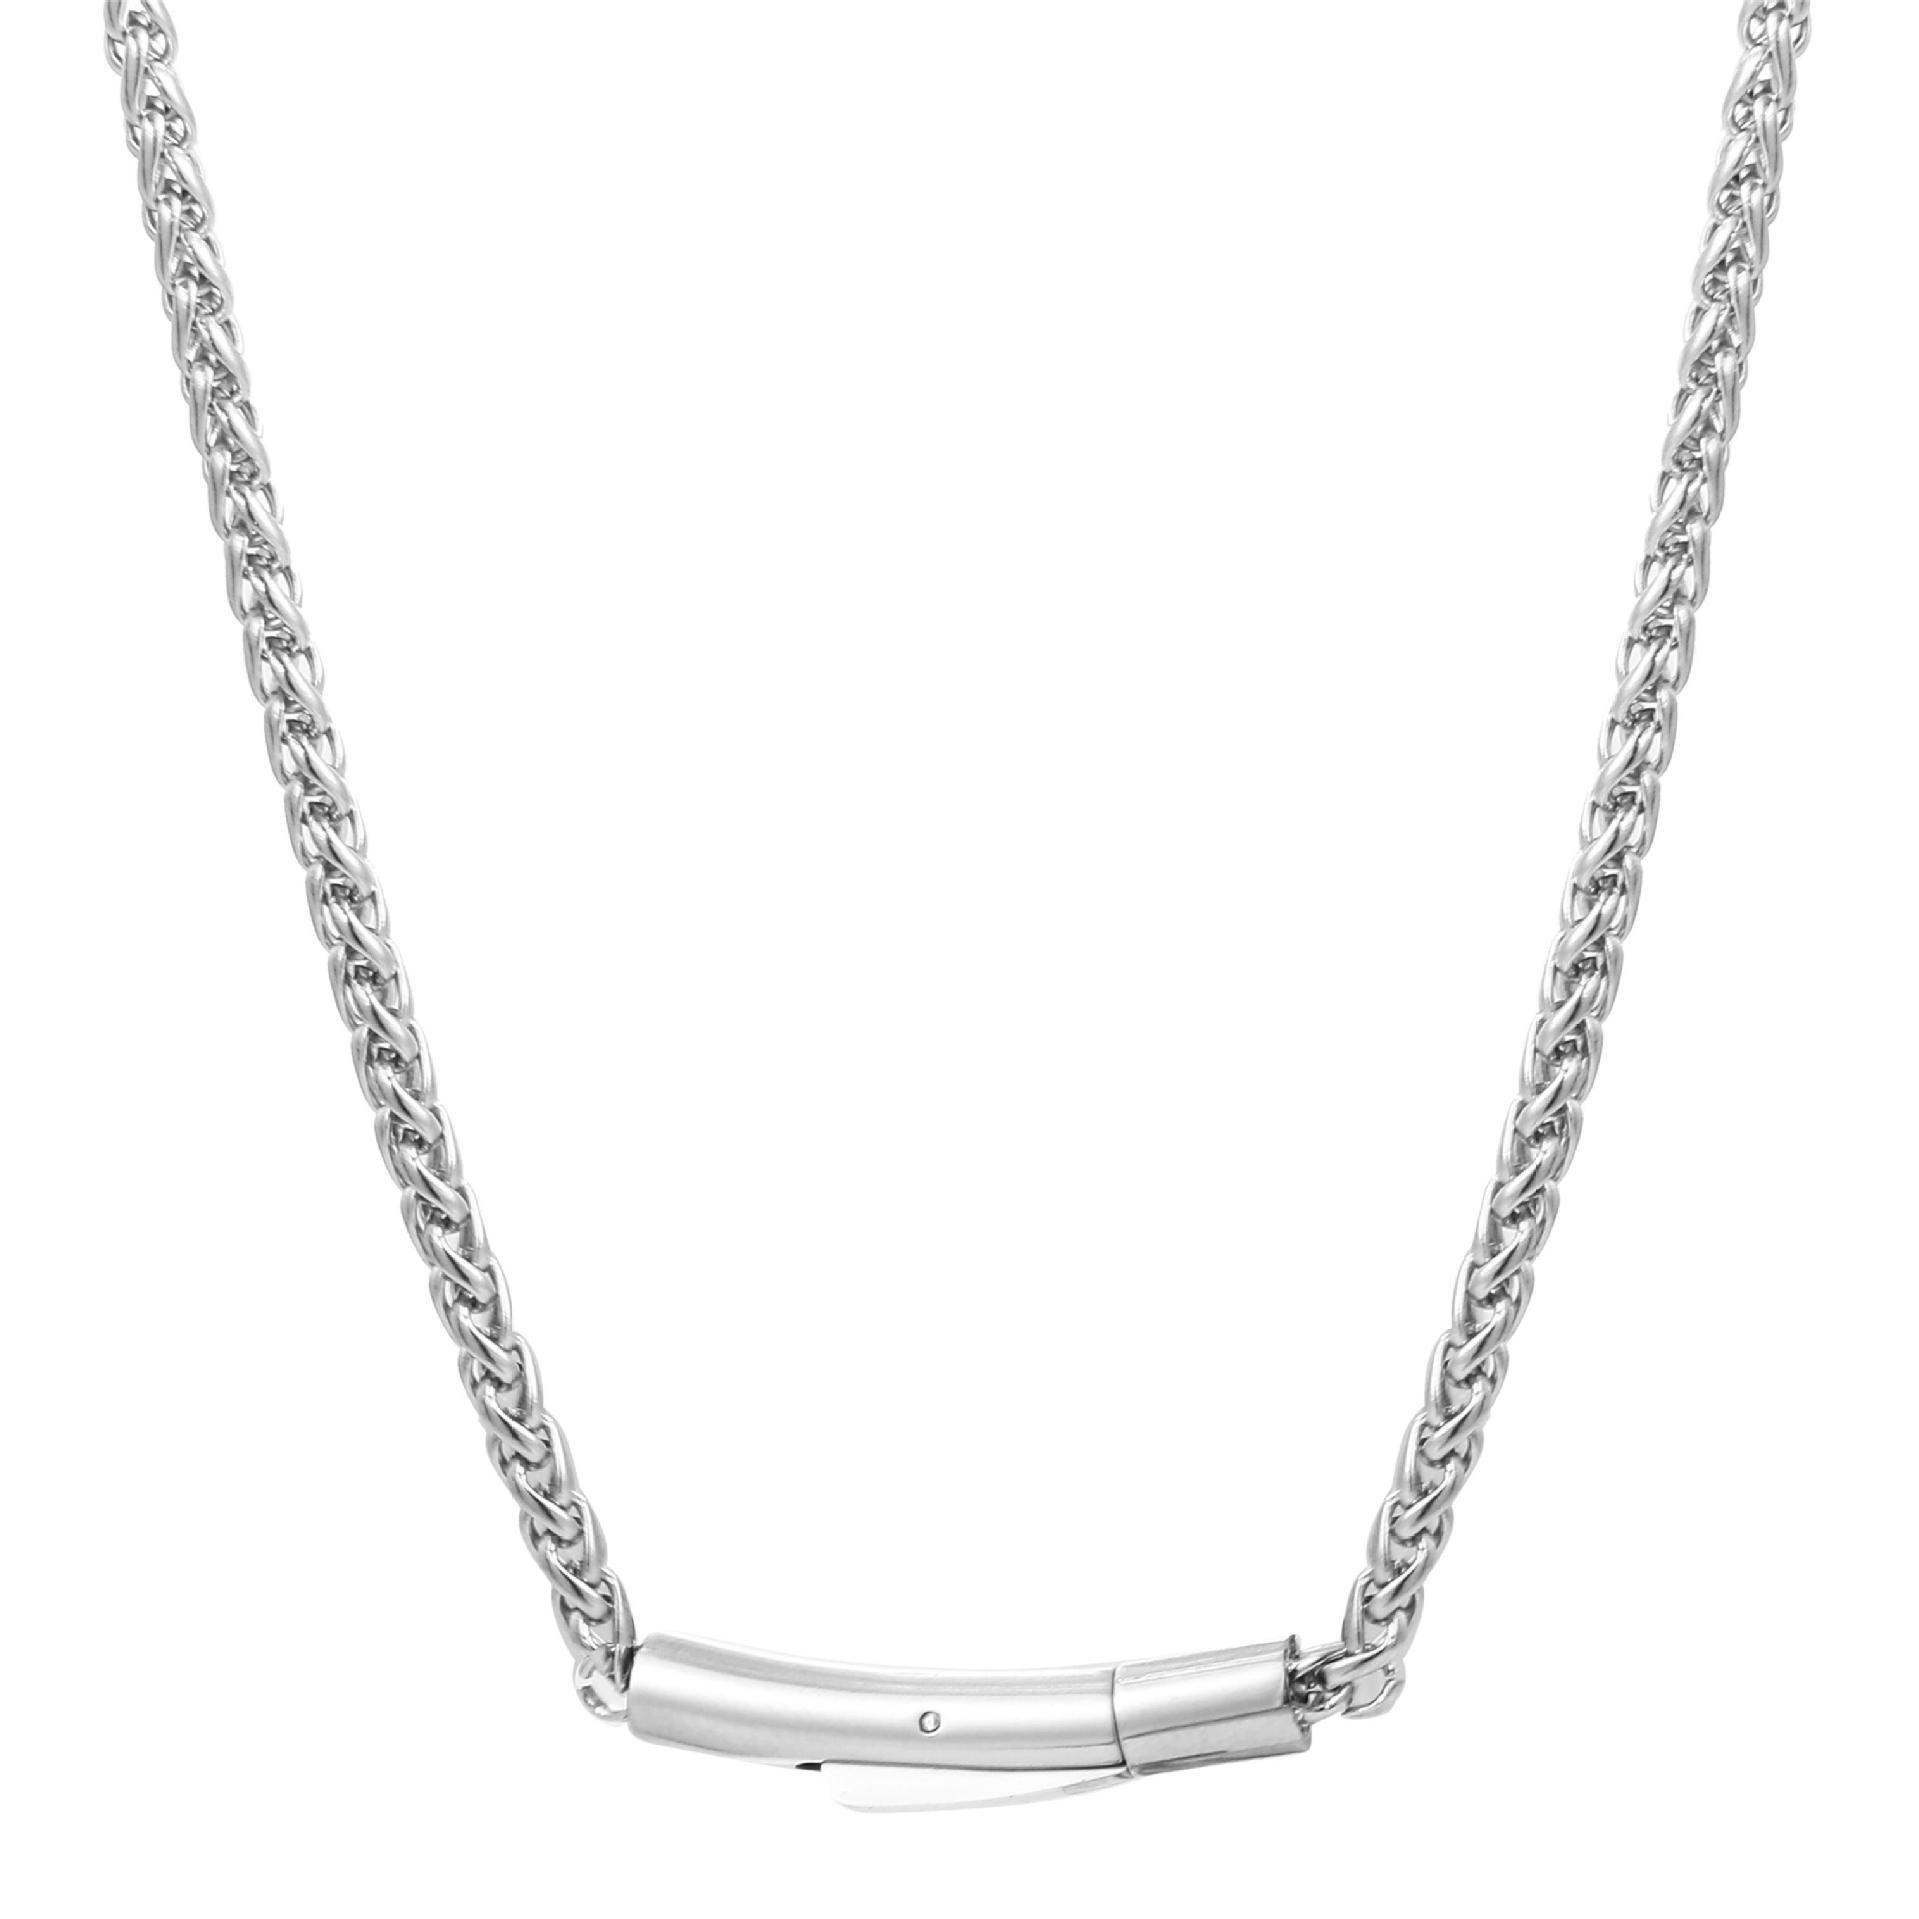 1:3MM wide steel necklace 45CM